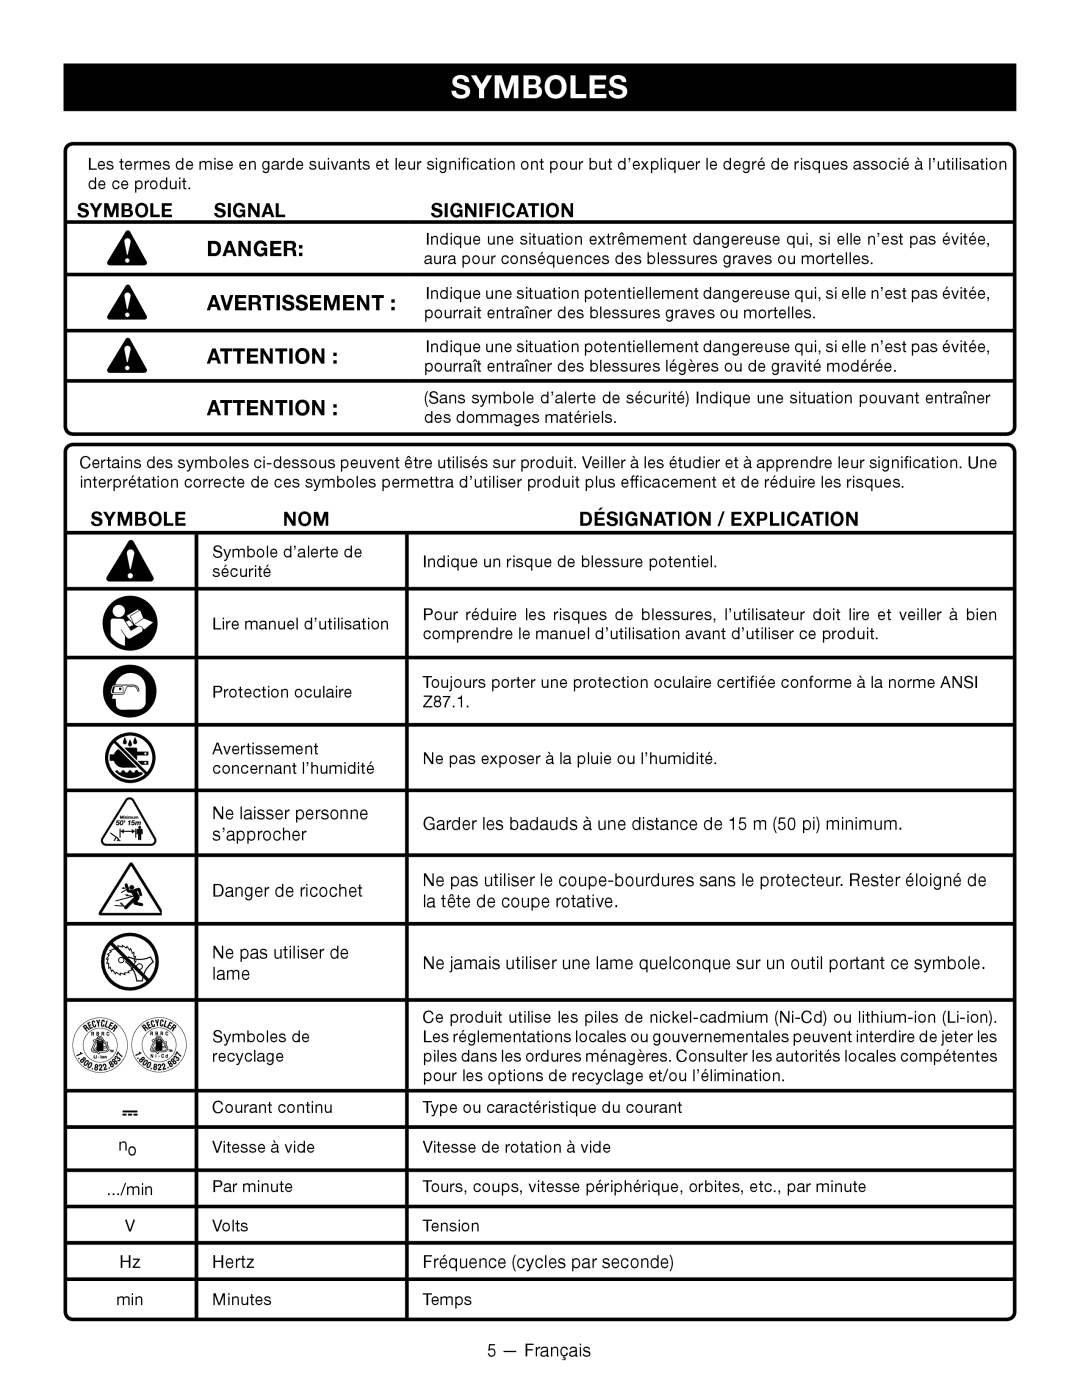 Ryobi P2005 manuel dutilisation Symboles, Signal, Signification, Désignation / Explication 